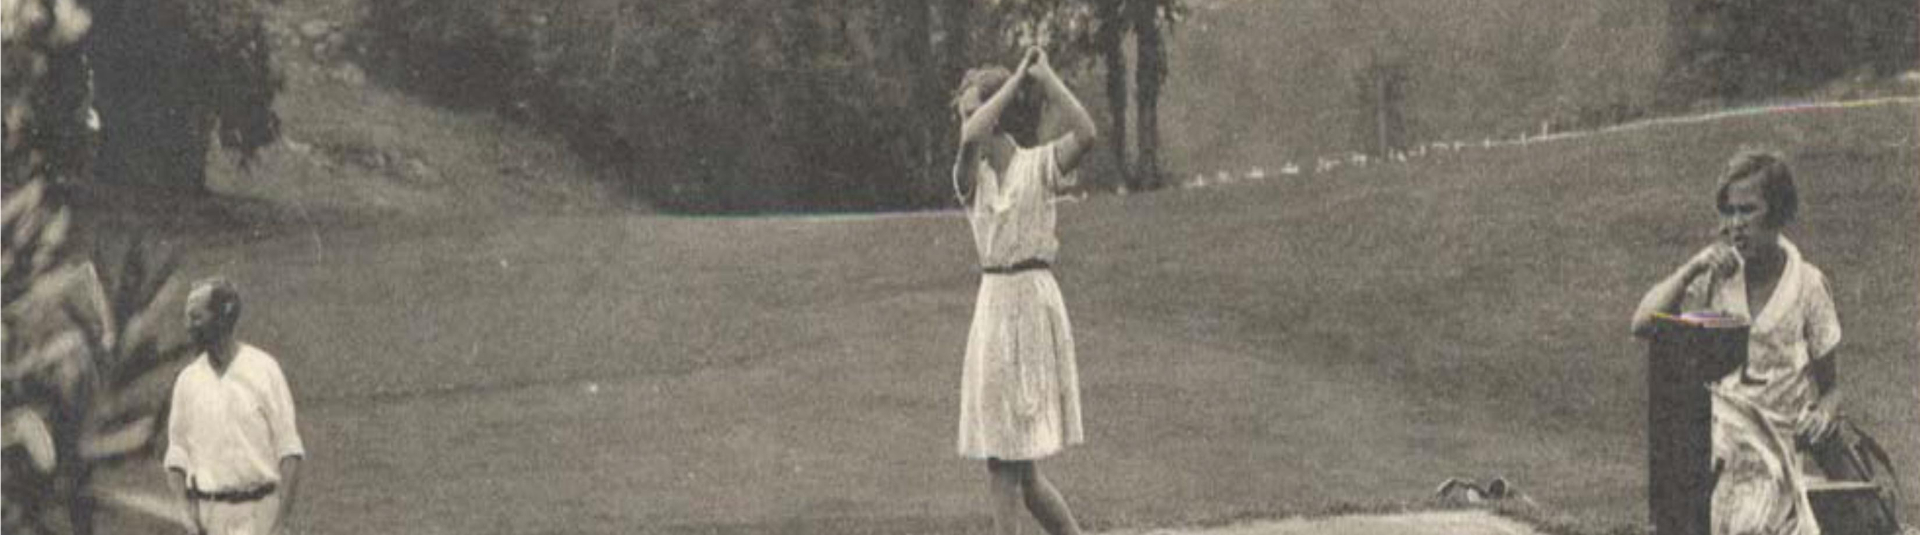 vintage snapshot of female golfers